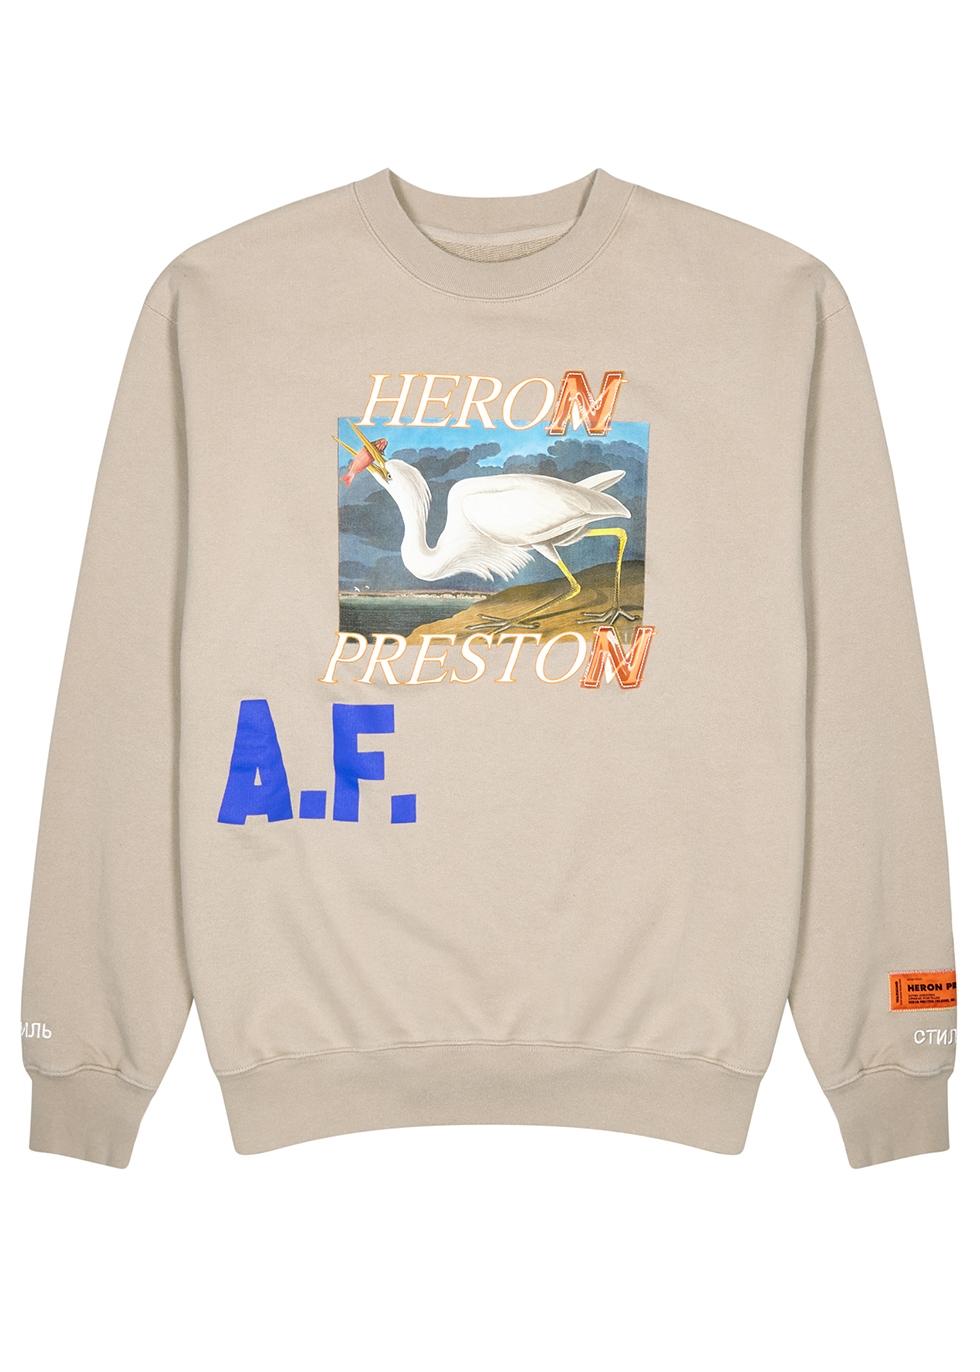 Heron Preston Authorized Fake Printed Cotton Sweatshirt in Taupe 